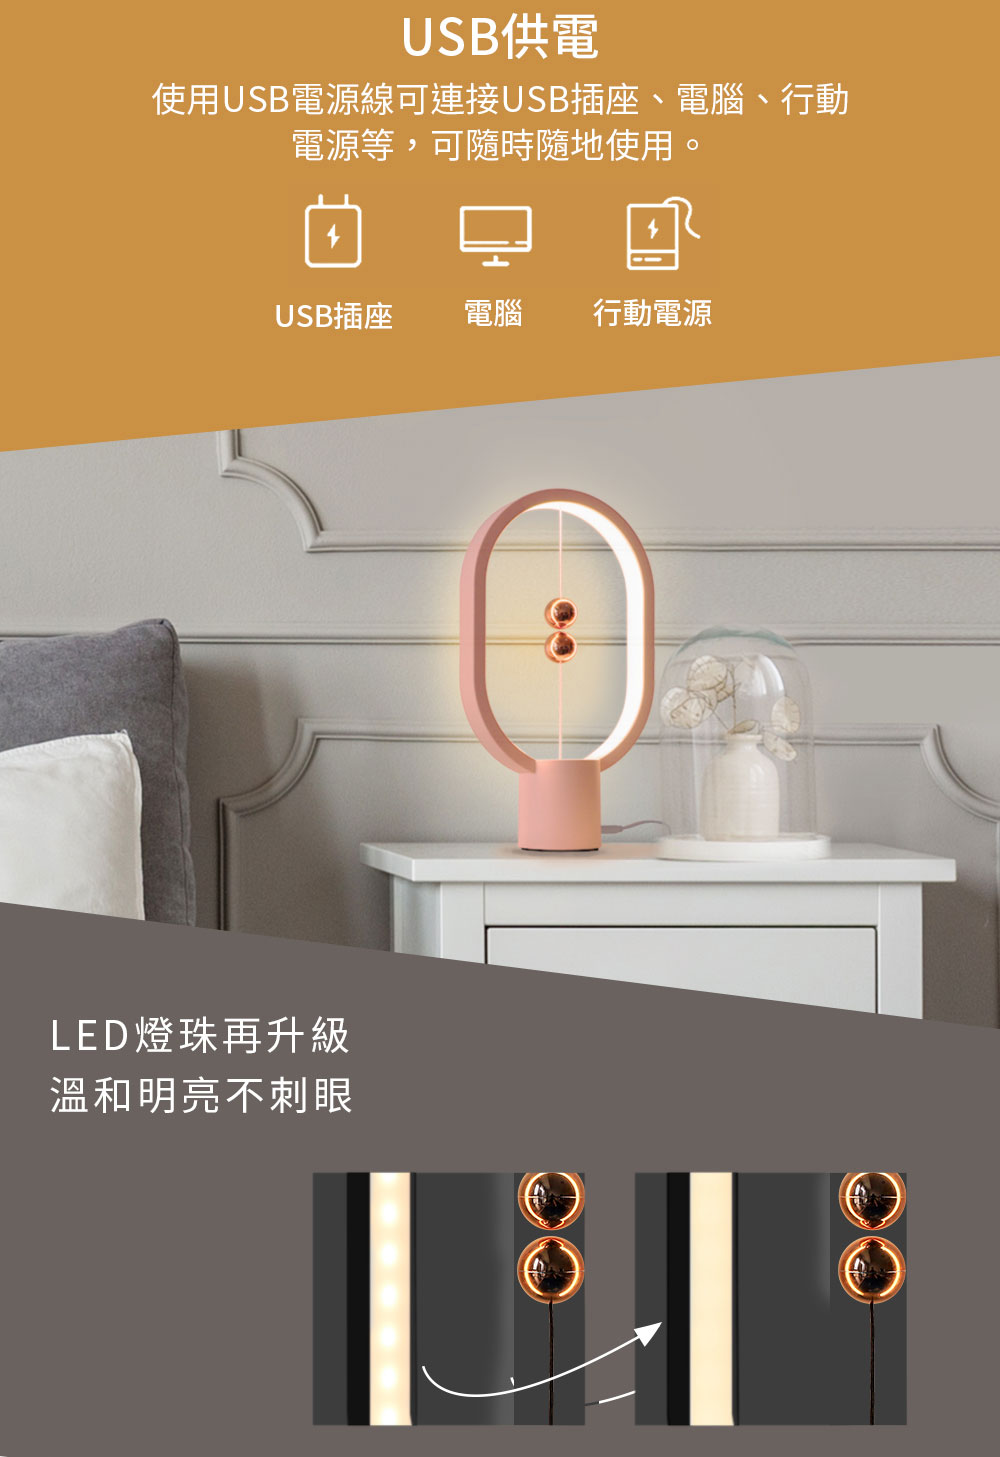 ZAN DESIGN - Heng PRO 衡燈mini 2.0 橢圓 (櫻花粉)